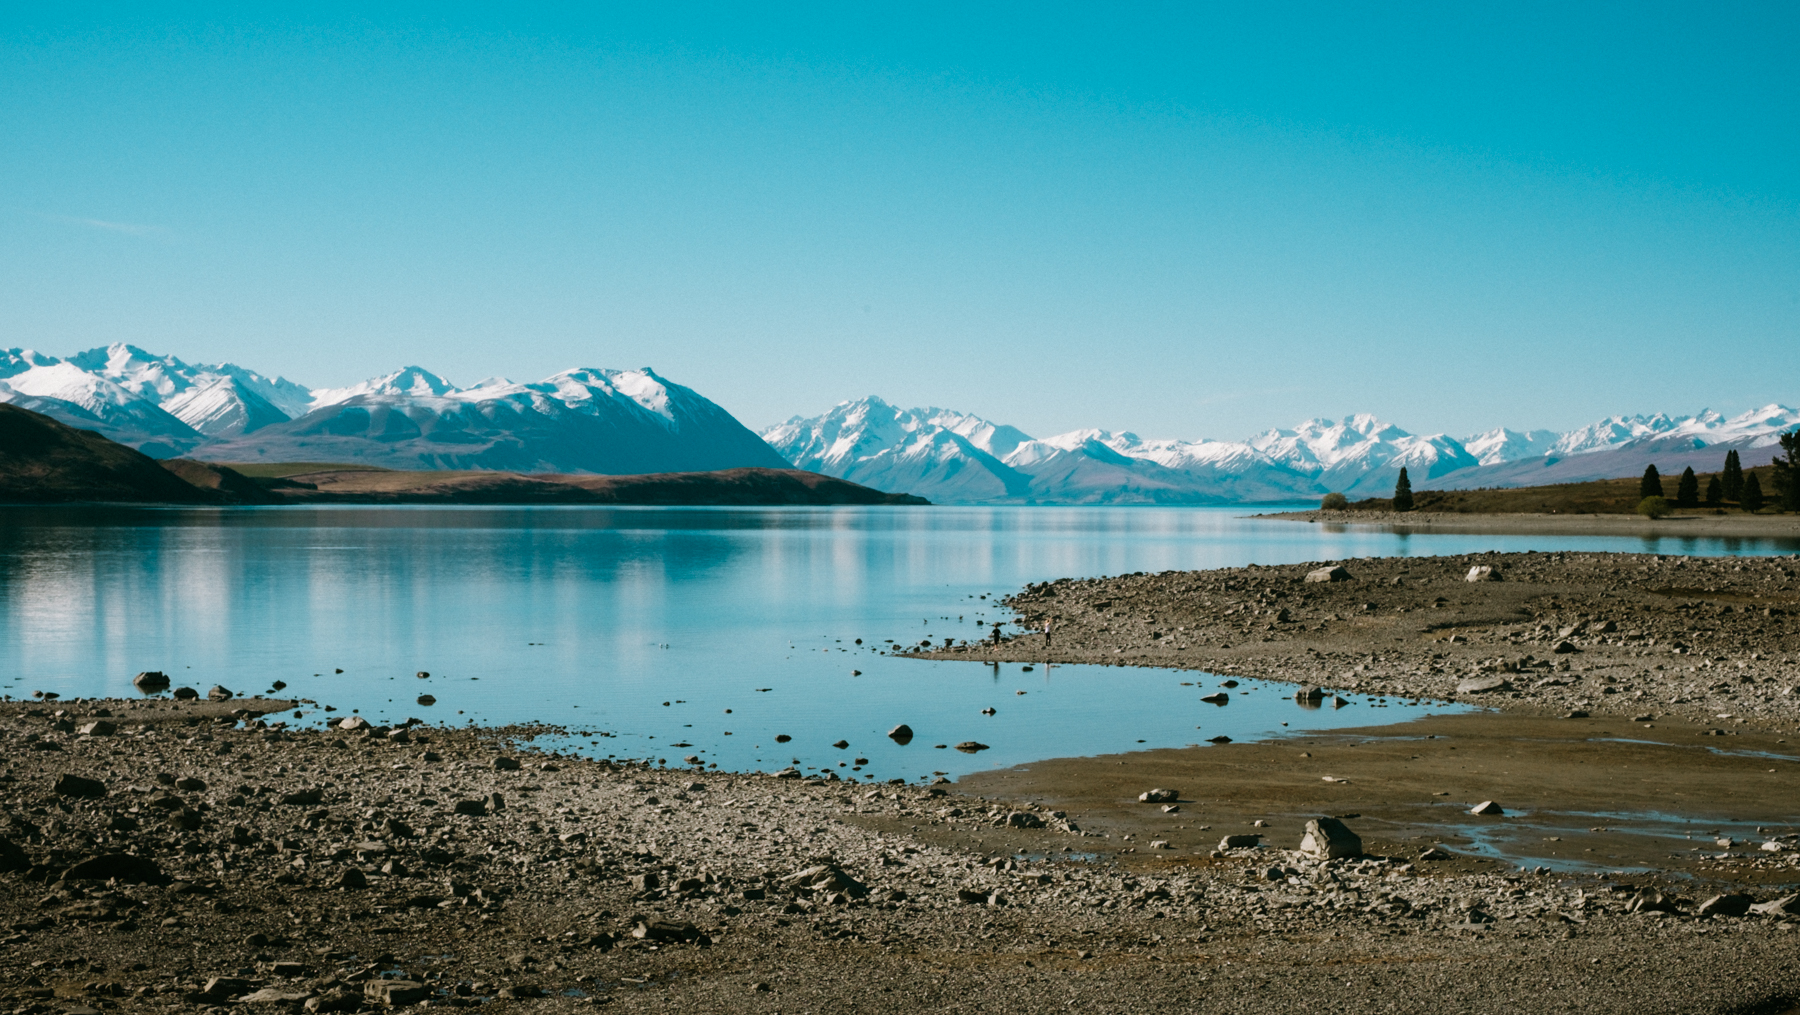 Lake Tekapo, New Zealand, Travel Photography, Fujifilm X-E2, Fuji 35mm 1.4 lens